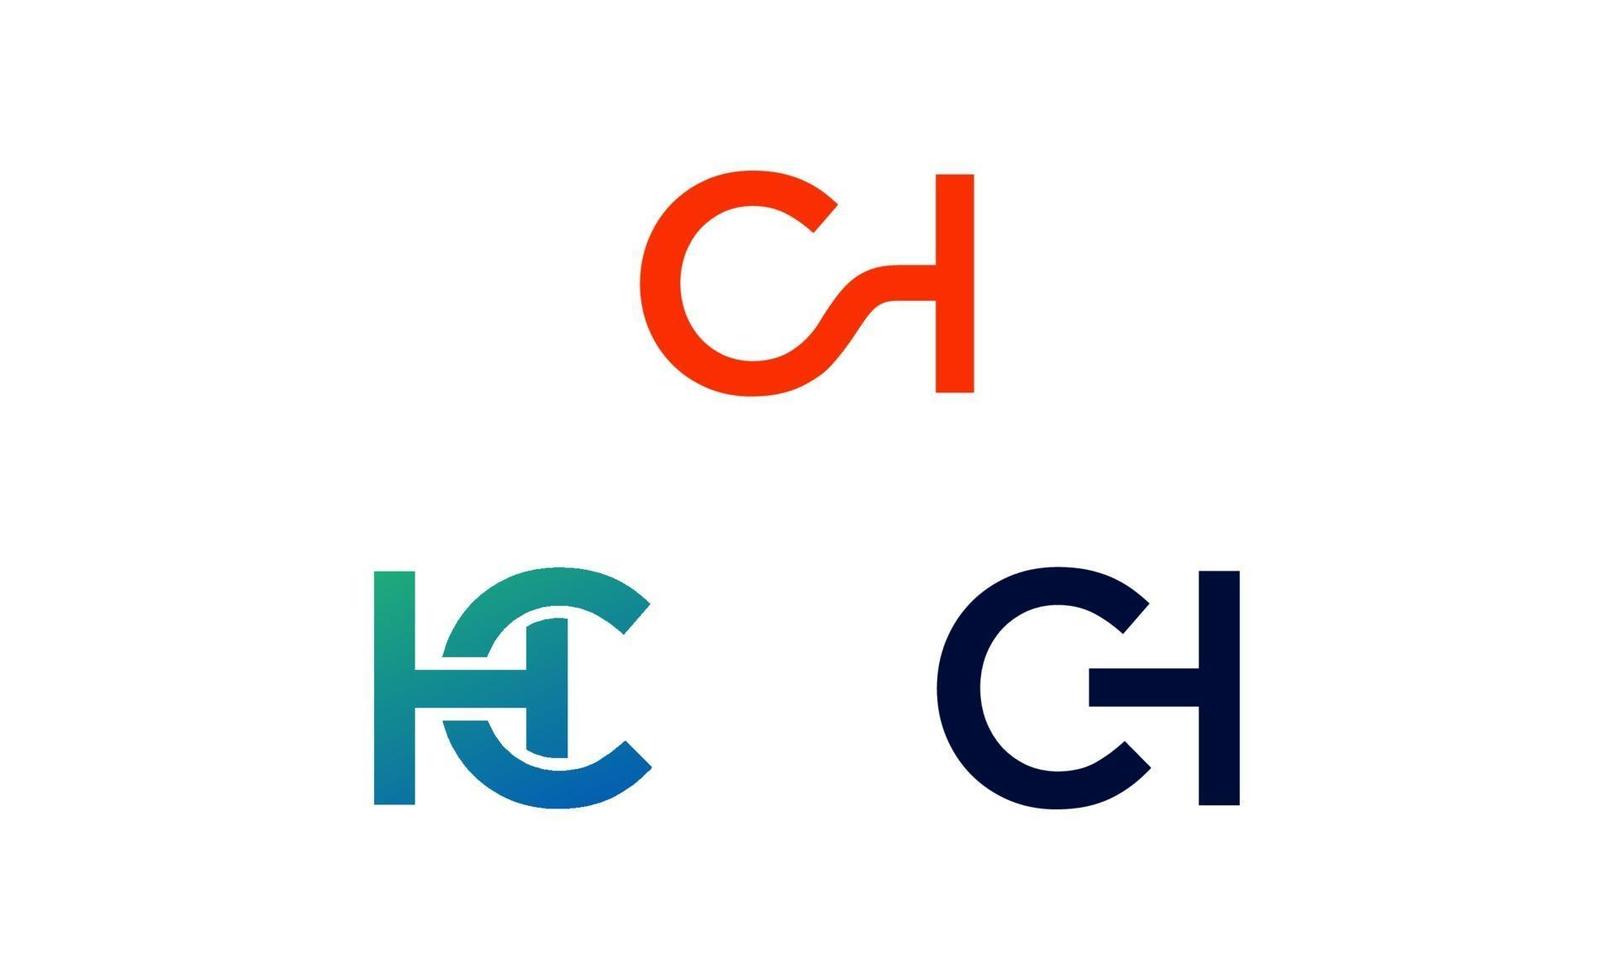 ch, hc inicial, vetor de modelo de design de logotipo